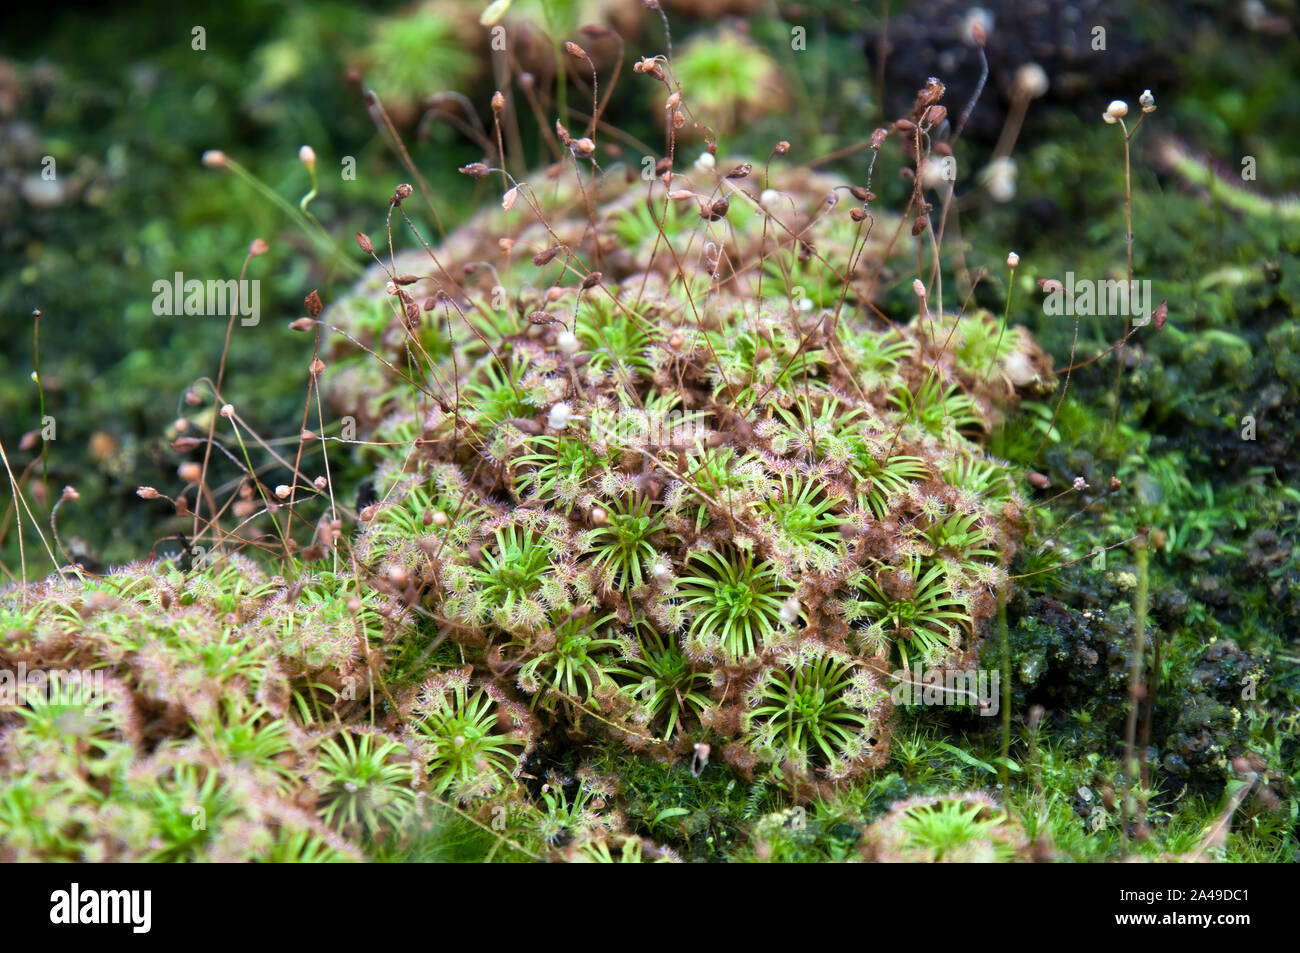 Sydney Australia,  pygmy drosera sundew plants with sticky mucilage to catch insects Stock Photo